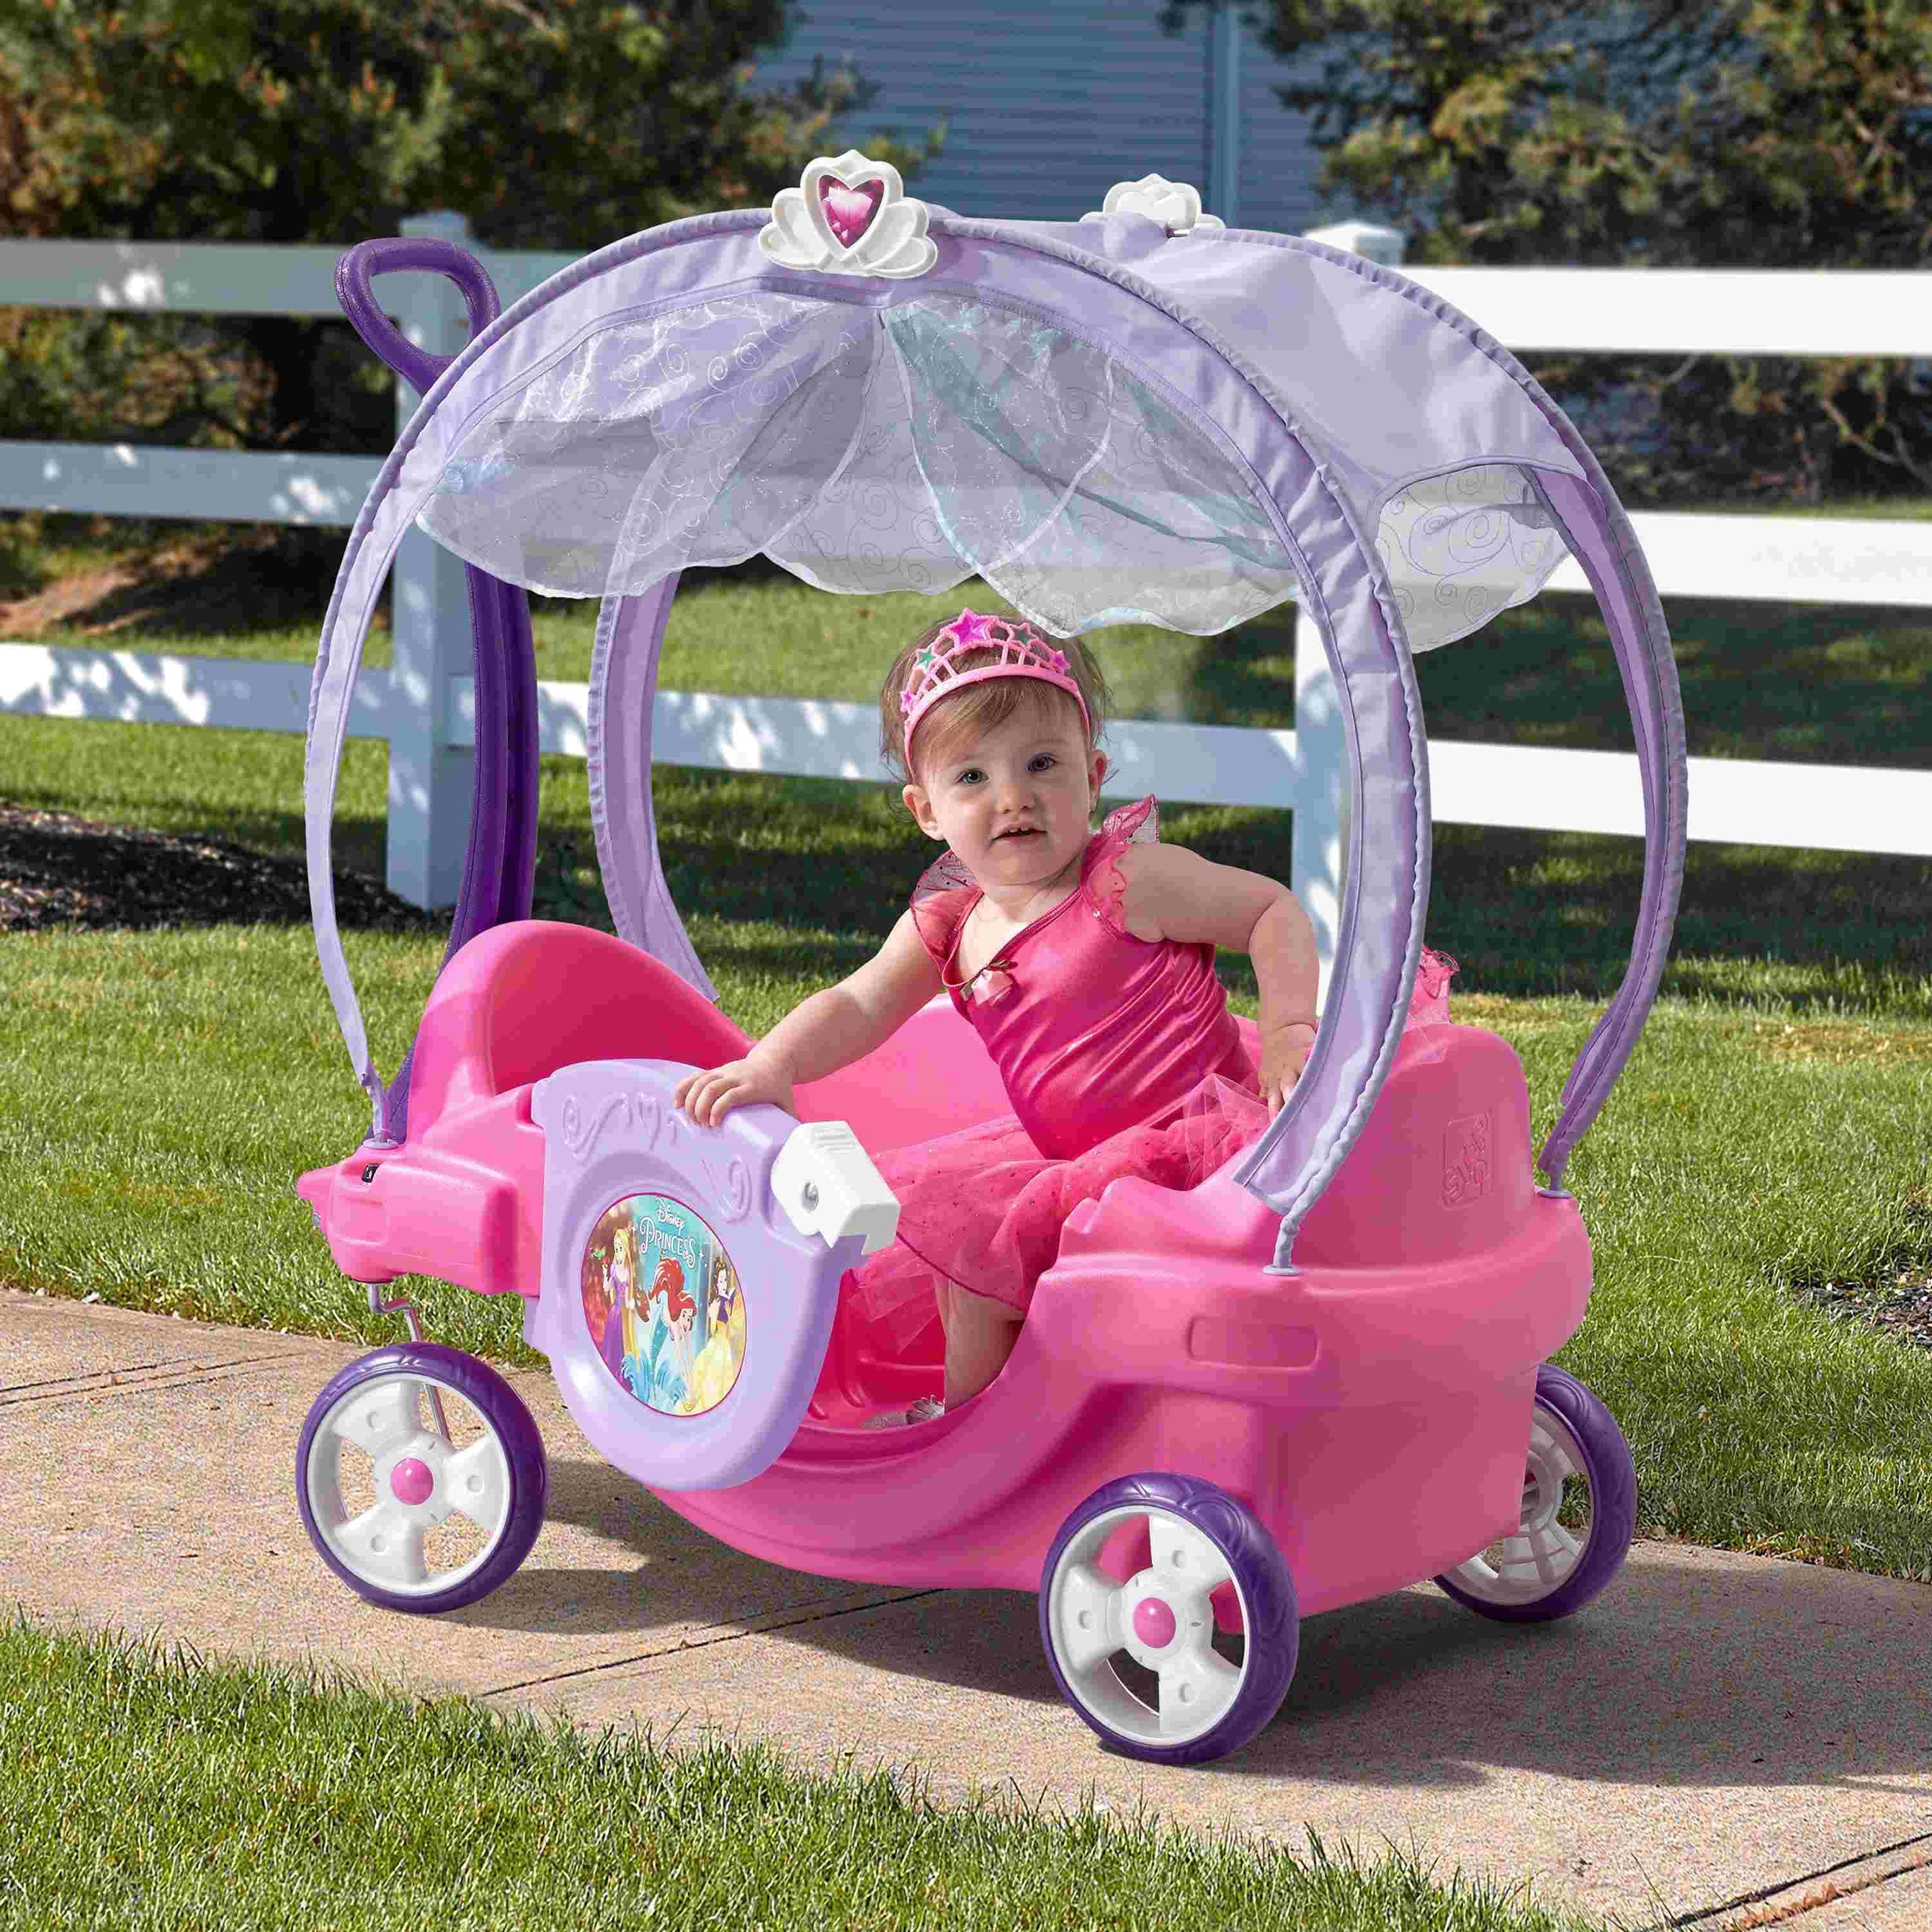 Step2 Disney Princess Chariot Wagon, Only $89 Shipped – Reg. $120!